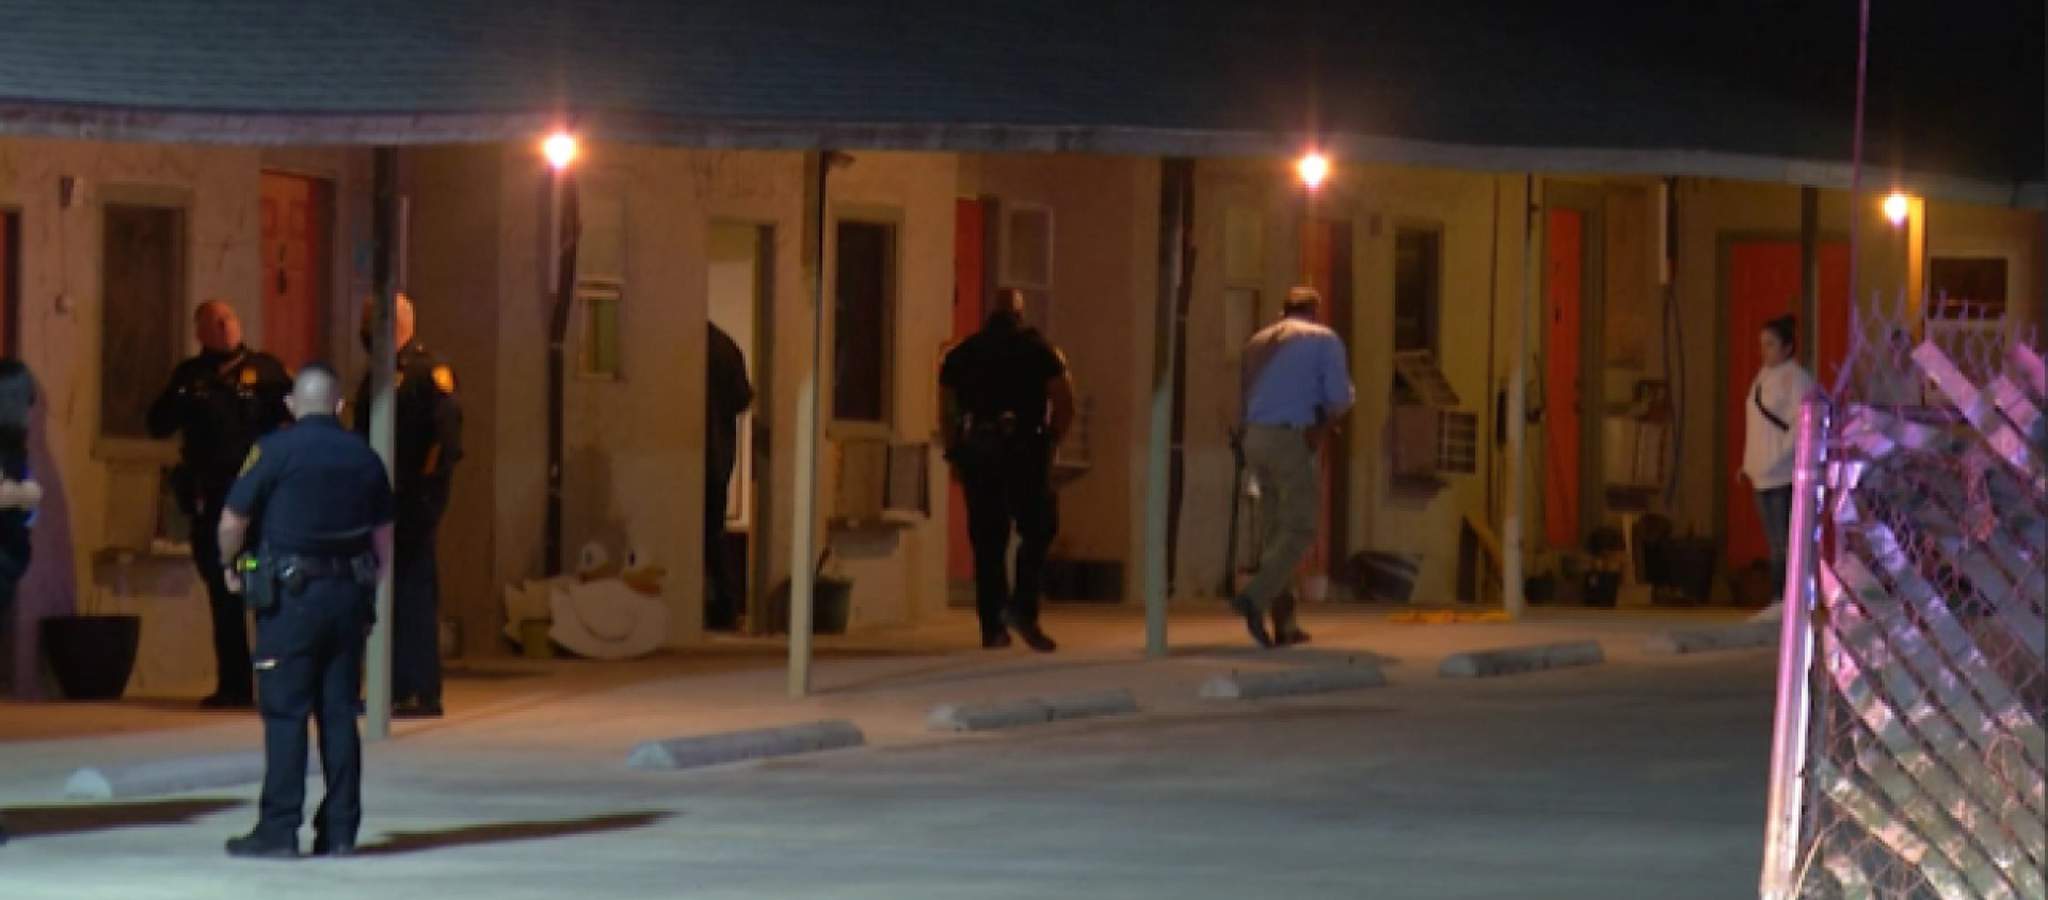 Teenager found shot inside South Side motel room, police say